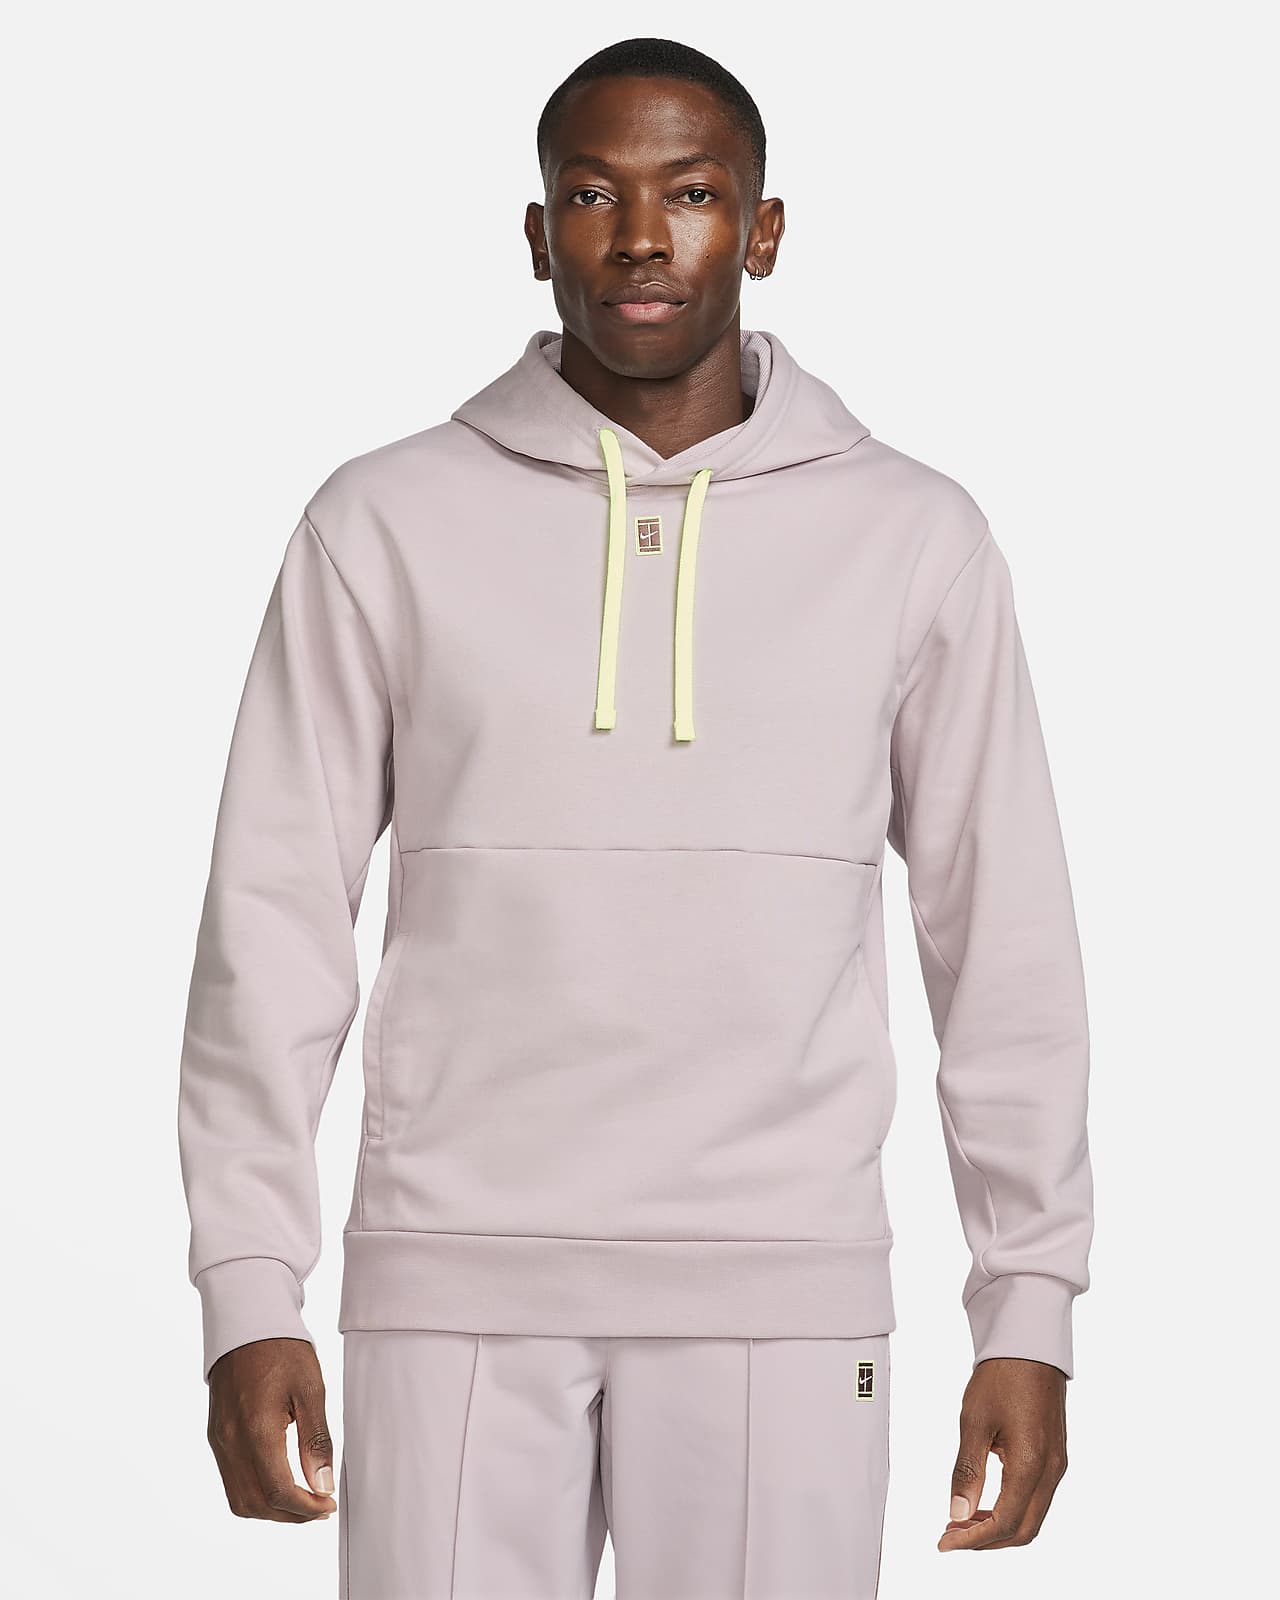 Nike SB Everett Pullover Scuba Hoodie - Men's